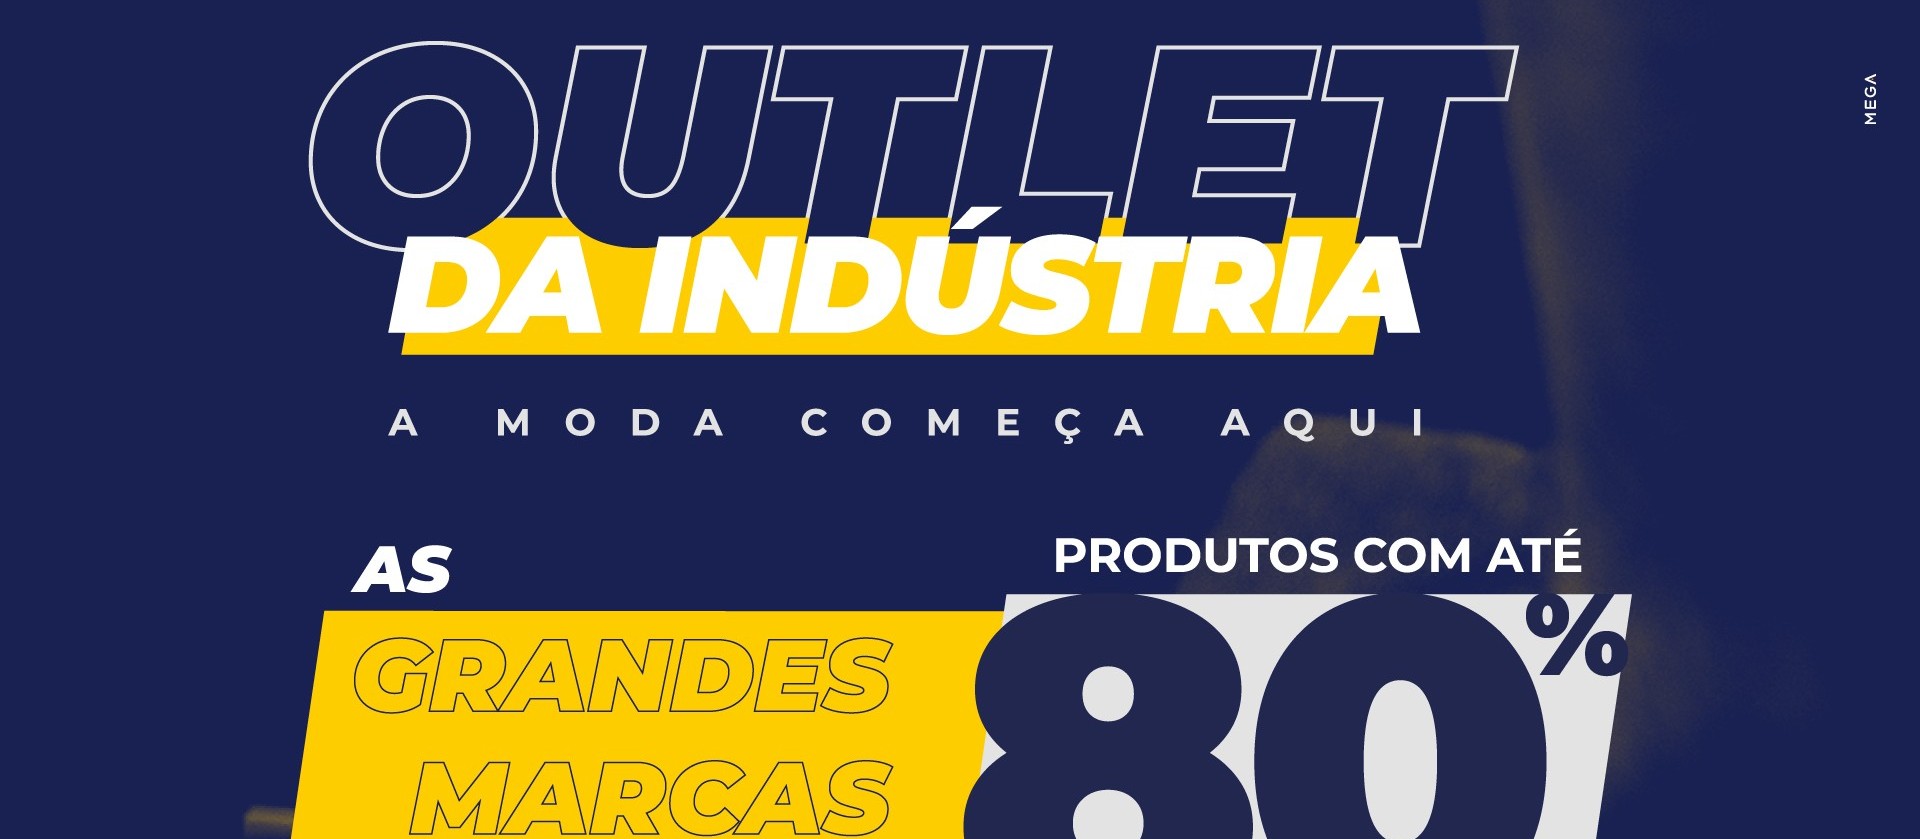  Evento  promove  "Outlet da Indústria confeccionista de Cascavel"